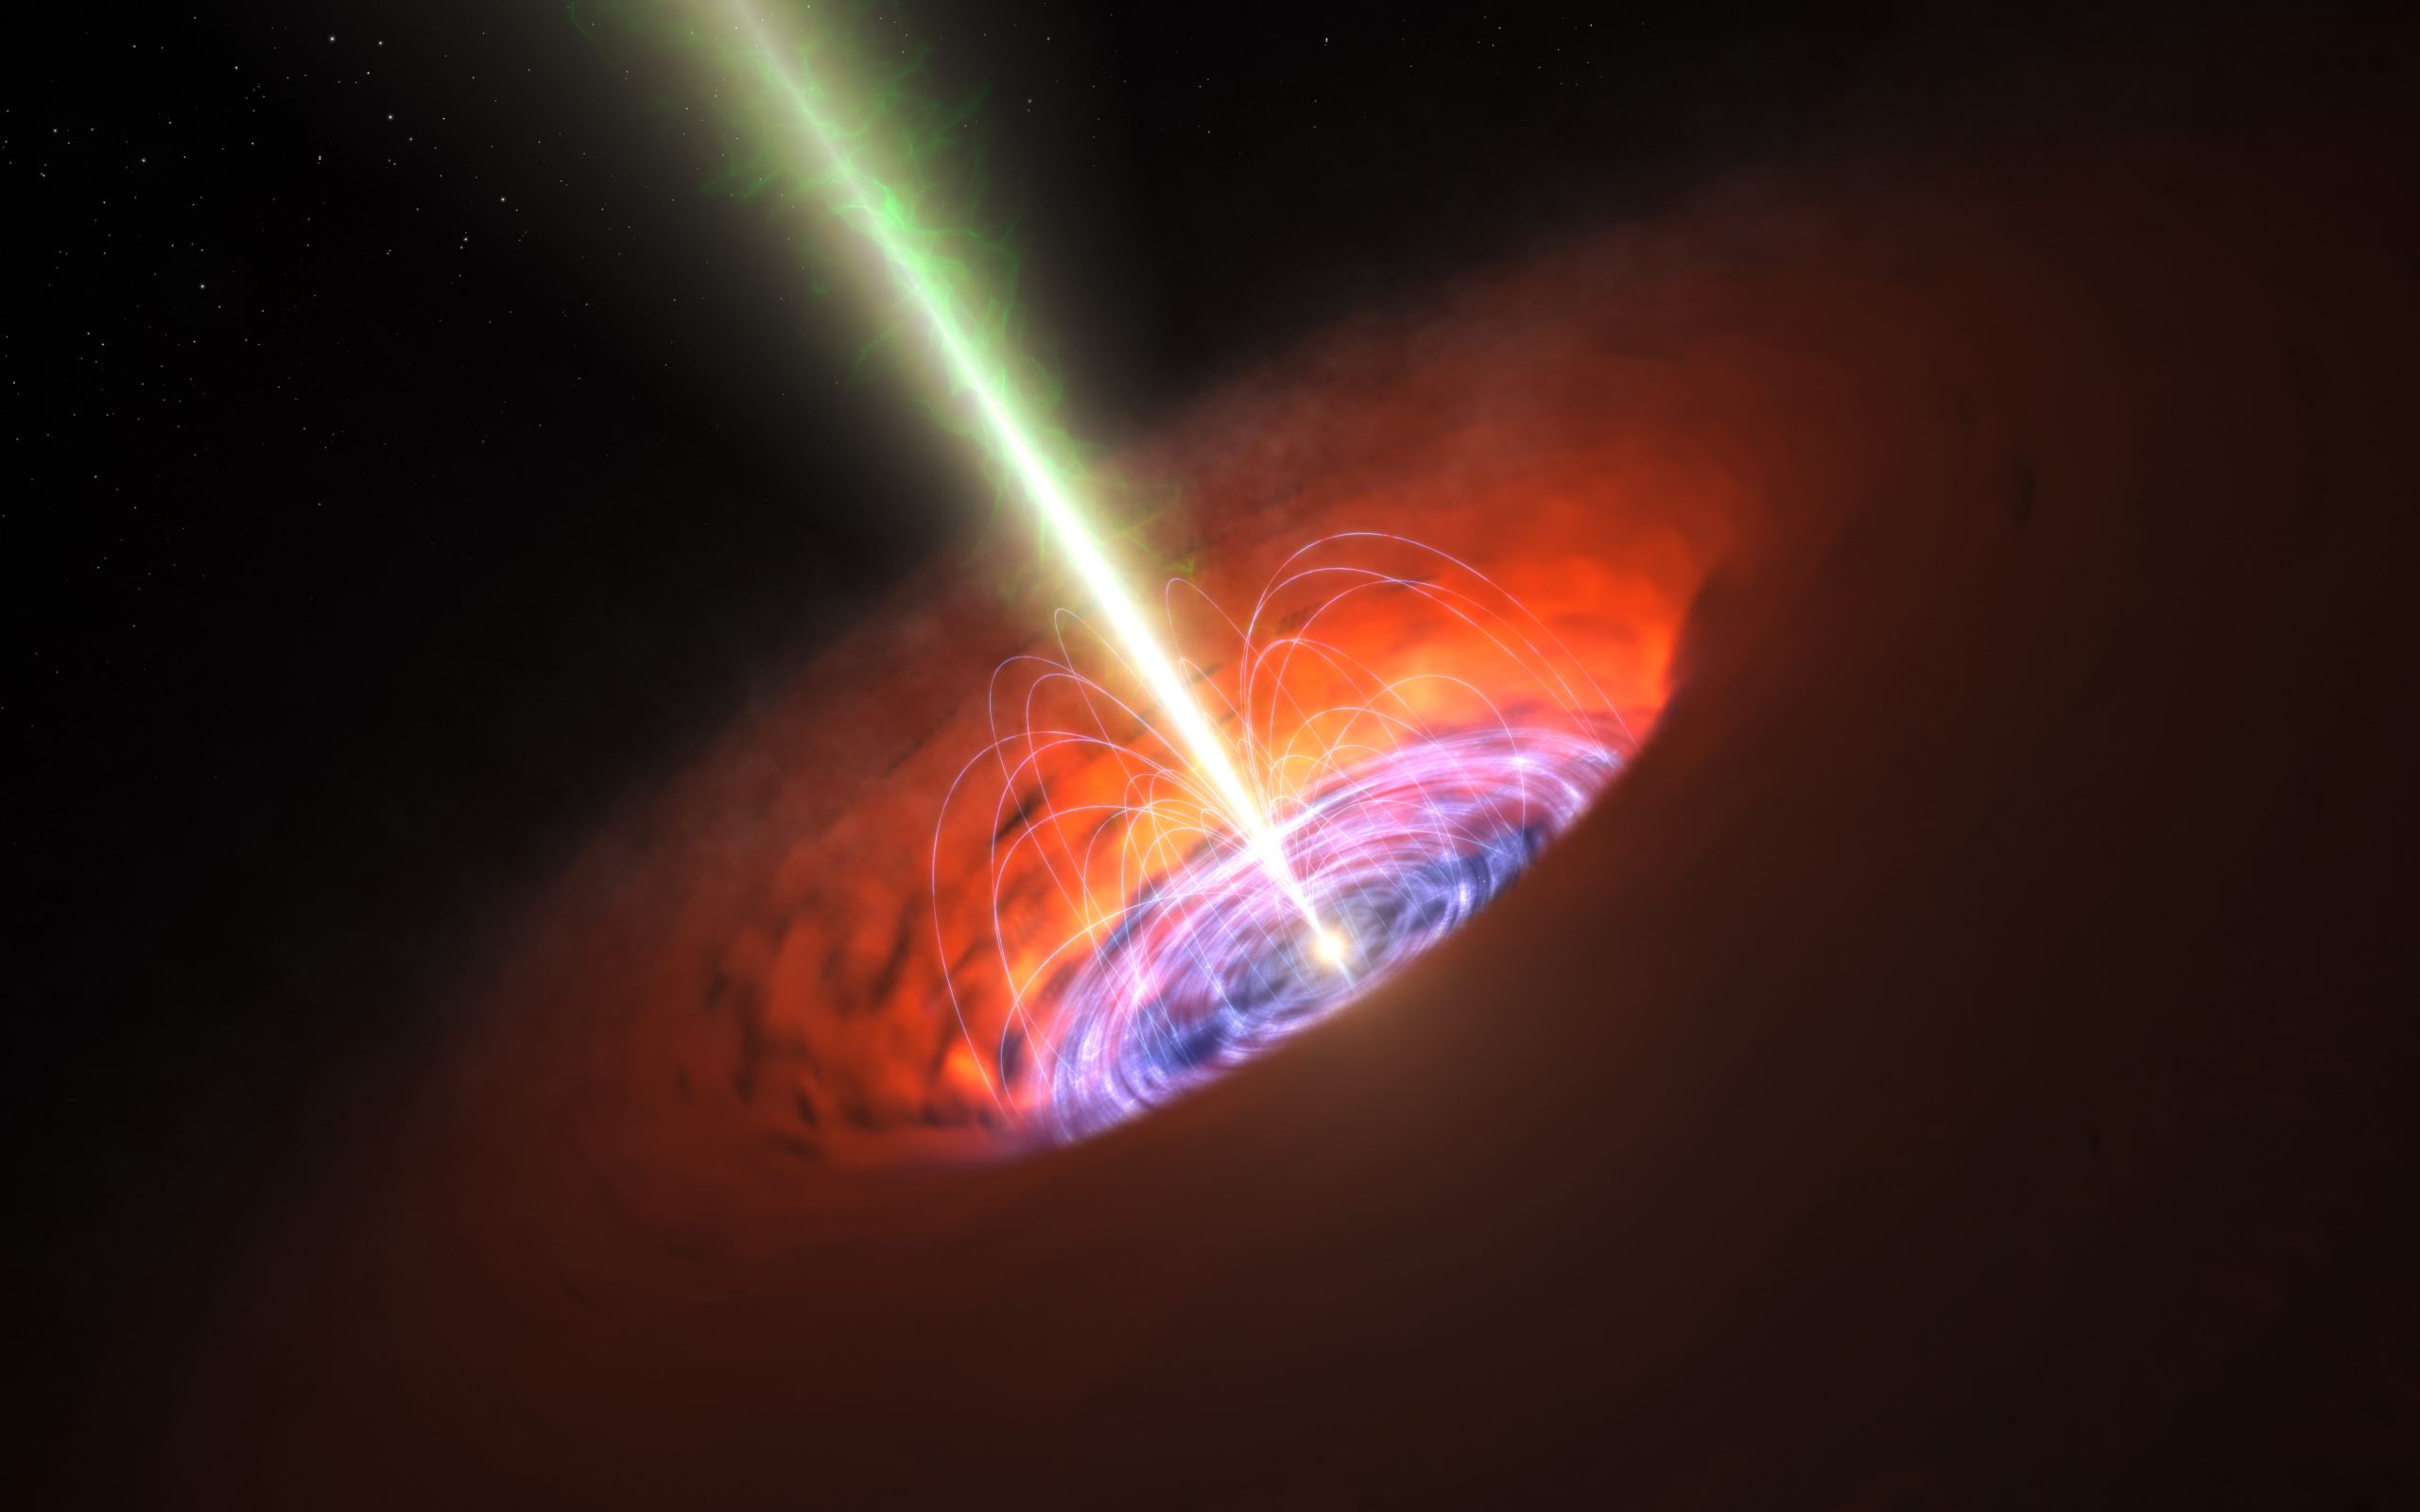 Do Advanced Civilizations Use Black Holes As Giant Quantum Computers